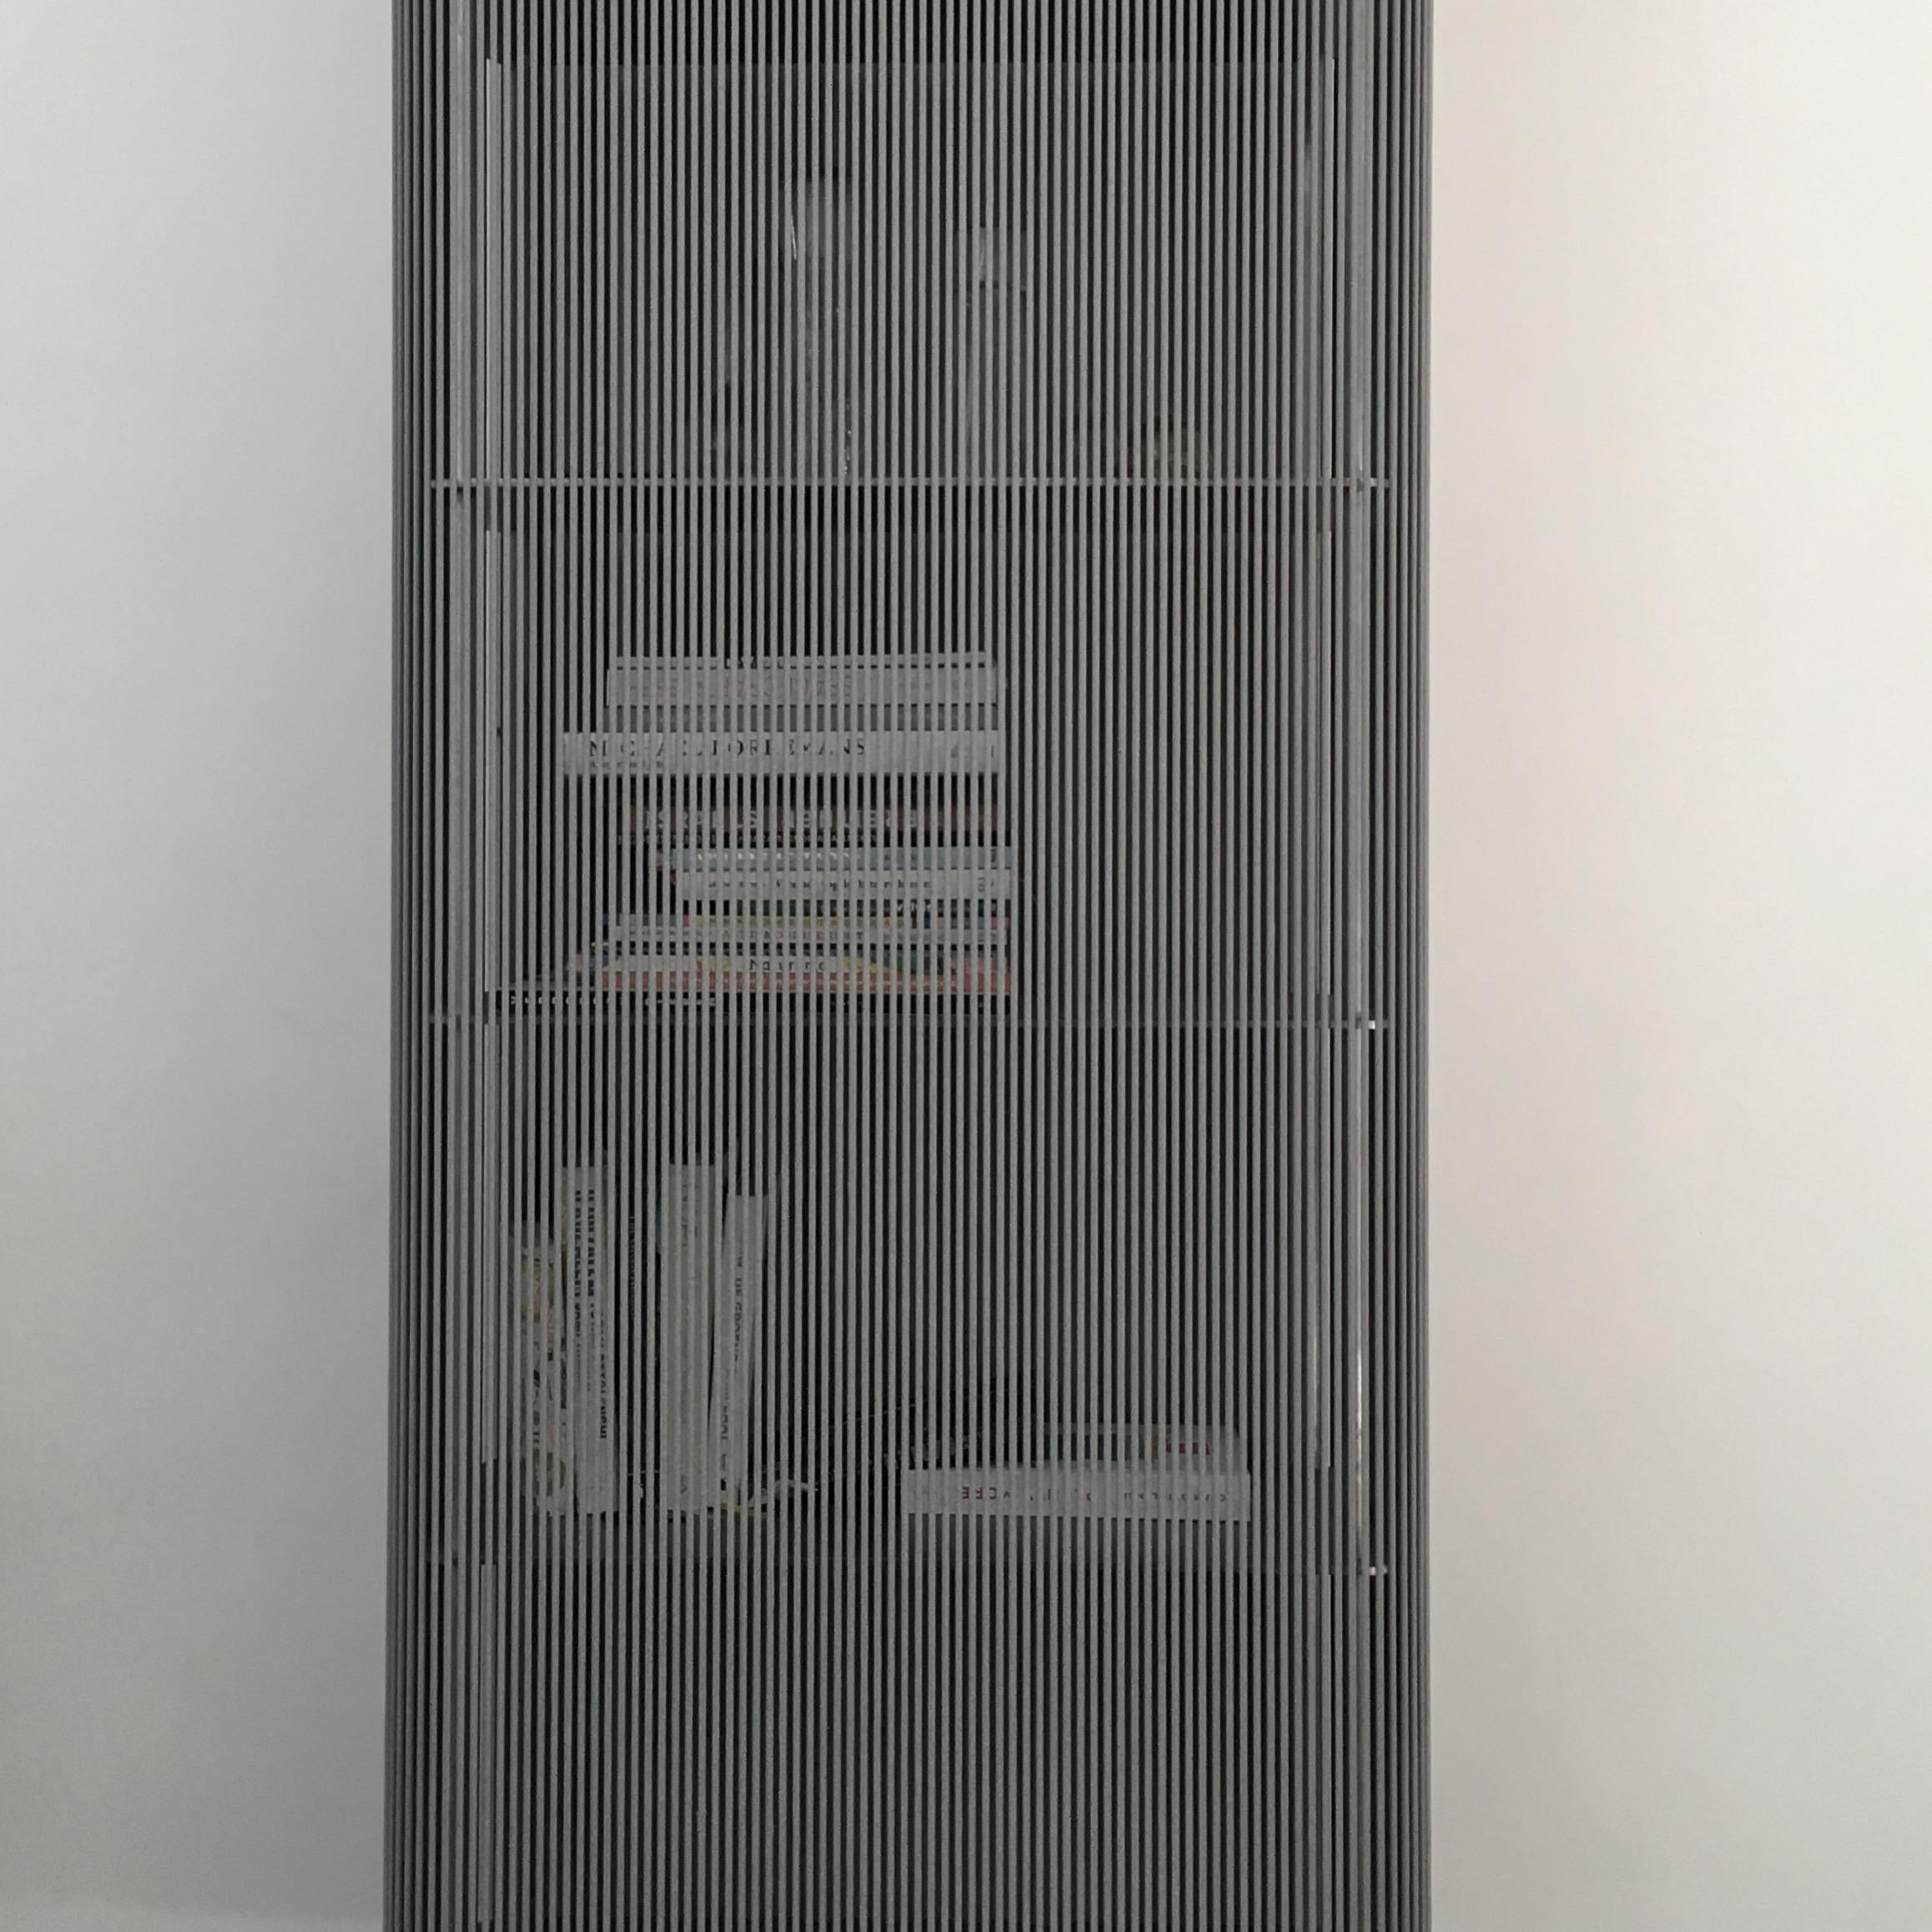 Aluminum Coil #5 Cabinet by Bram Kerkhofs